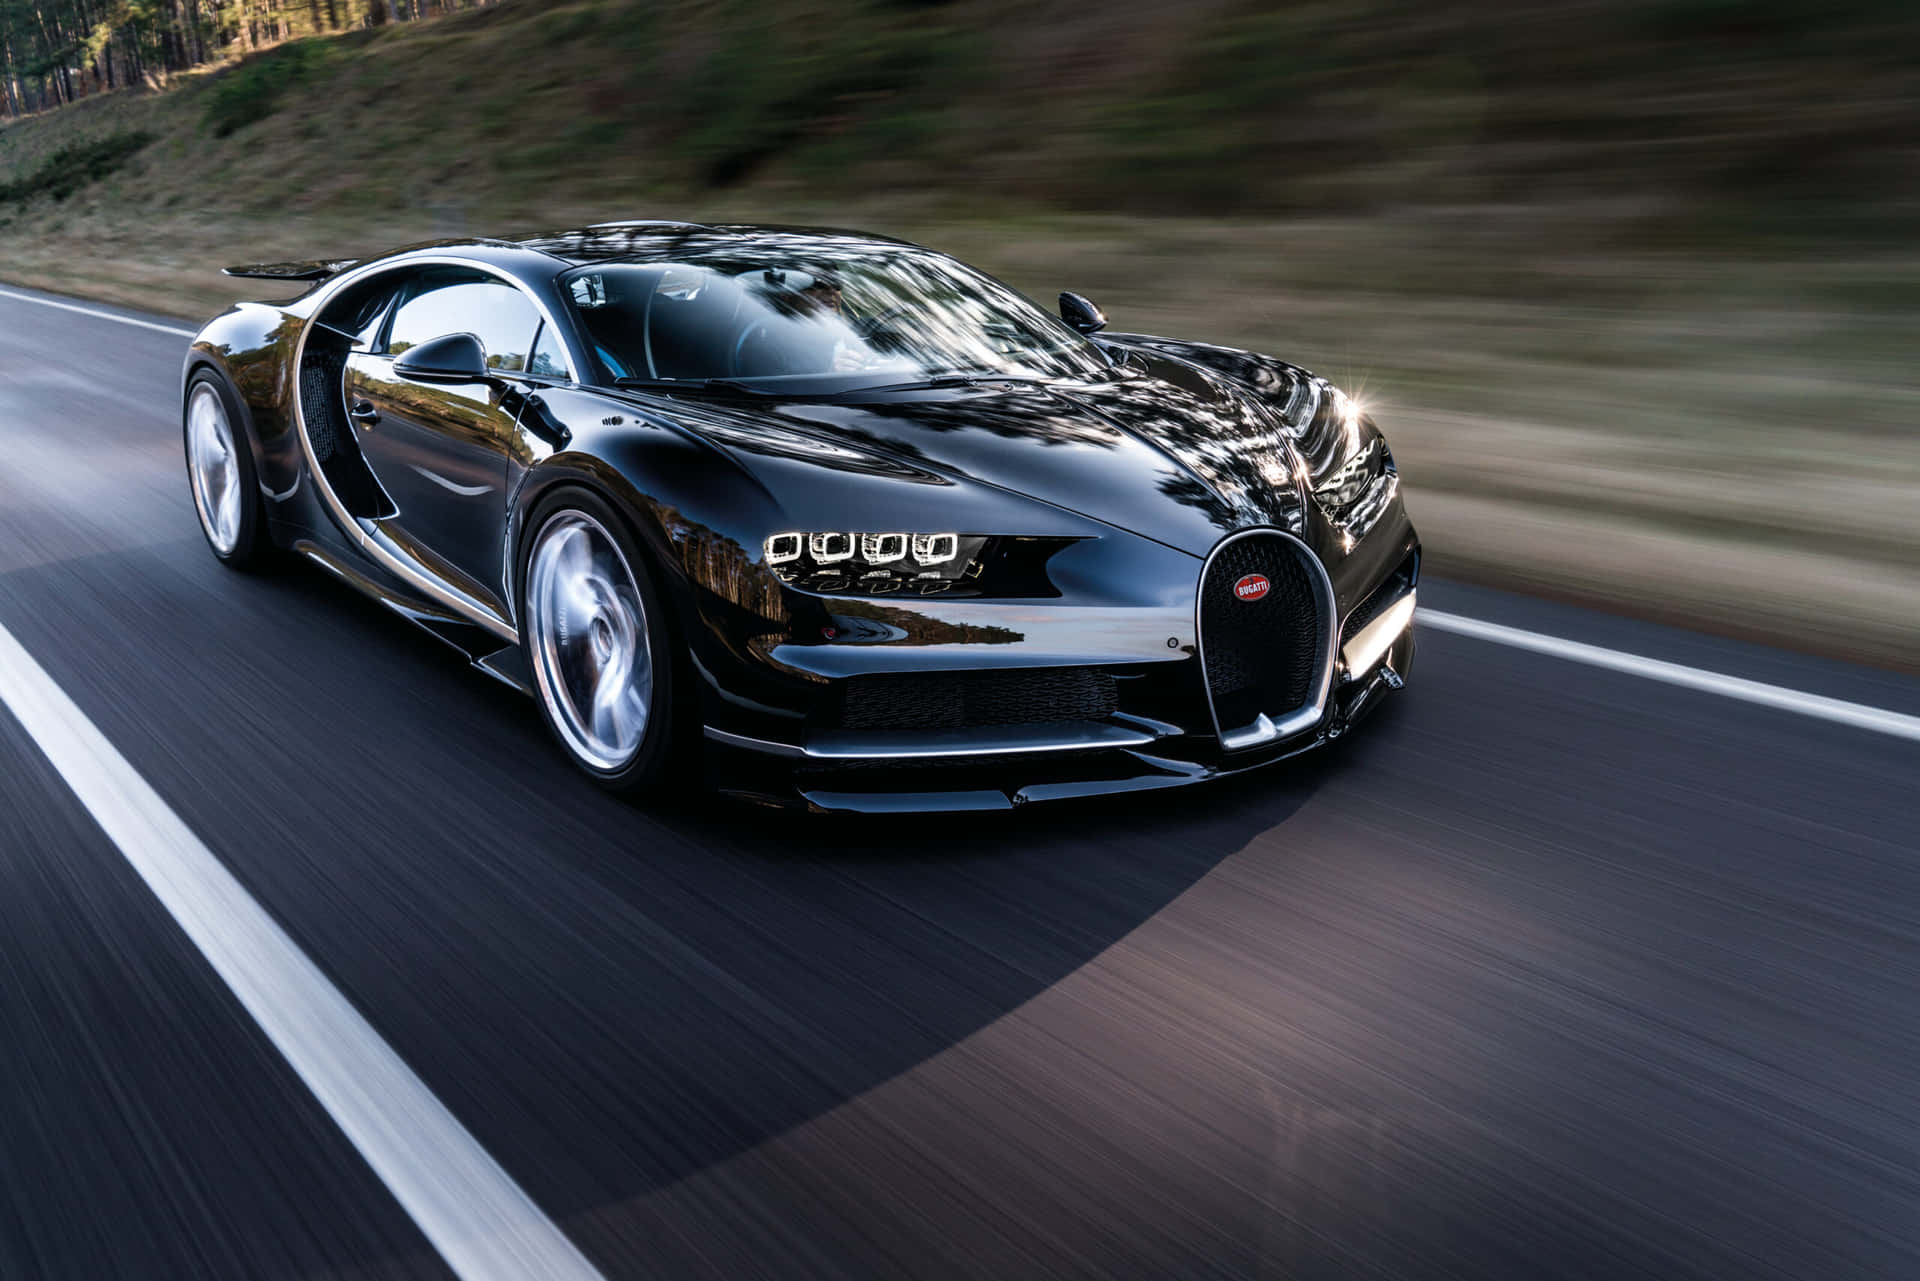 Speed&Style Twinned in the Luxurious Bugatti